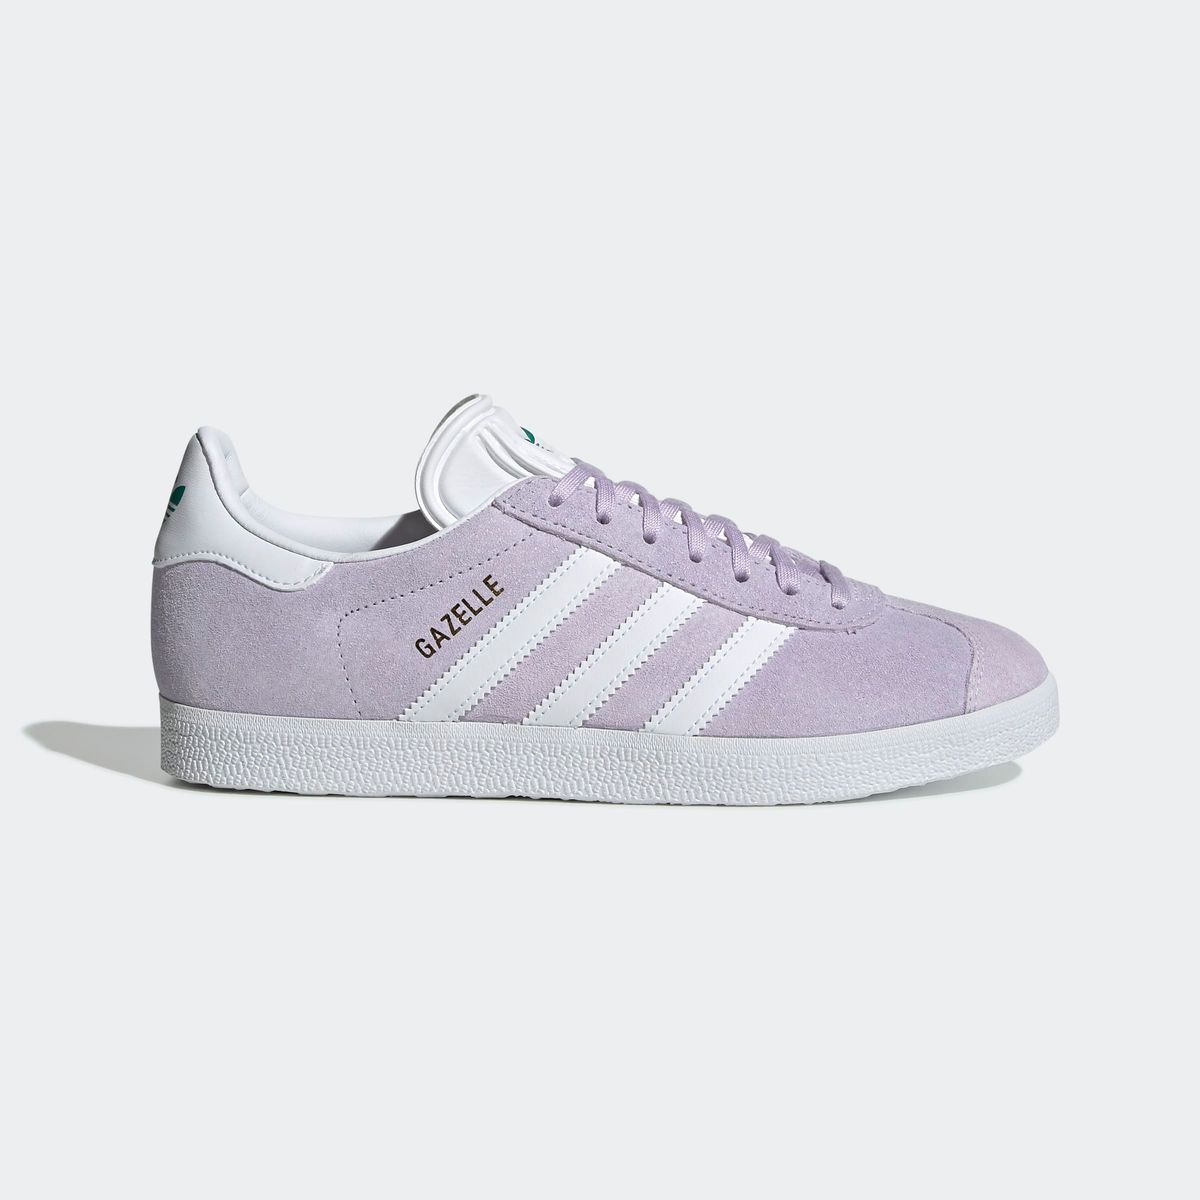 Adidas gazelle violet | La Redoute